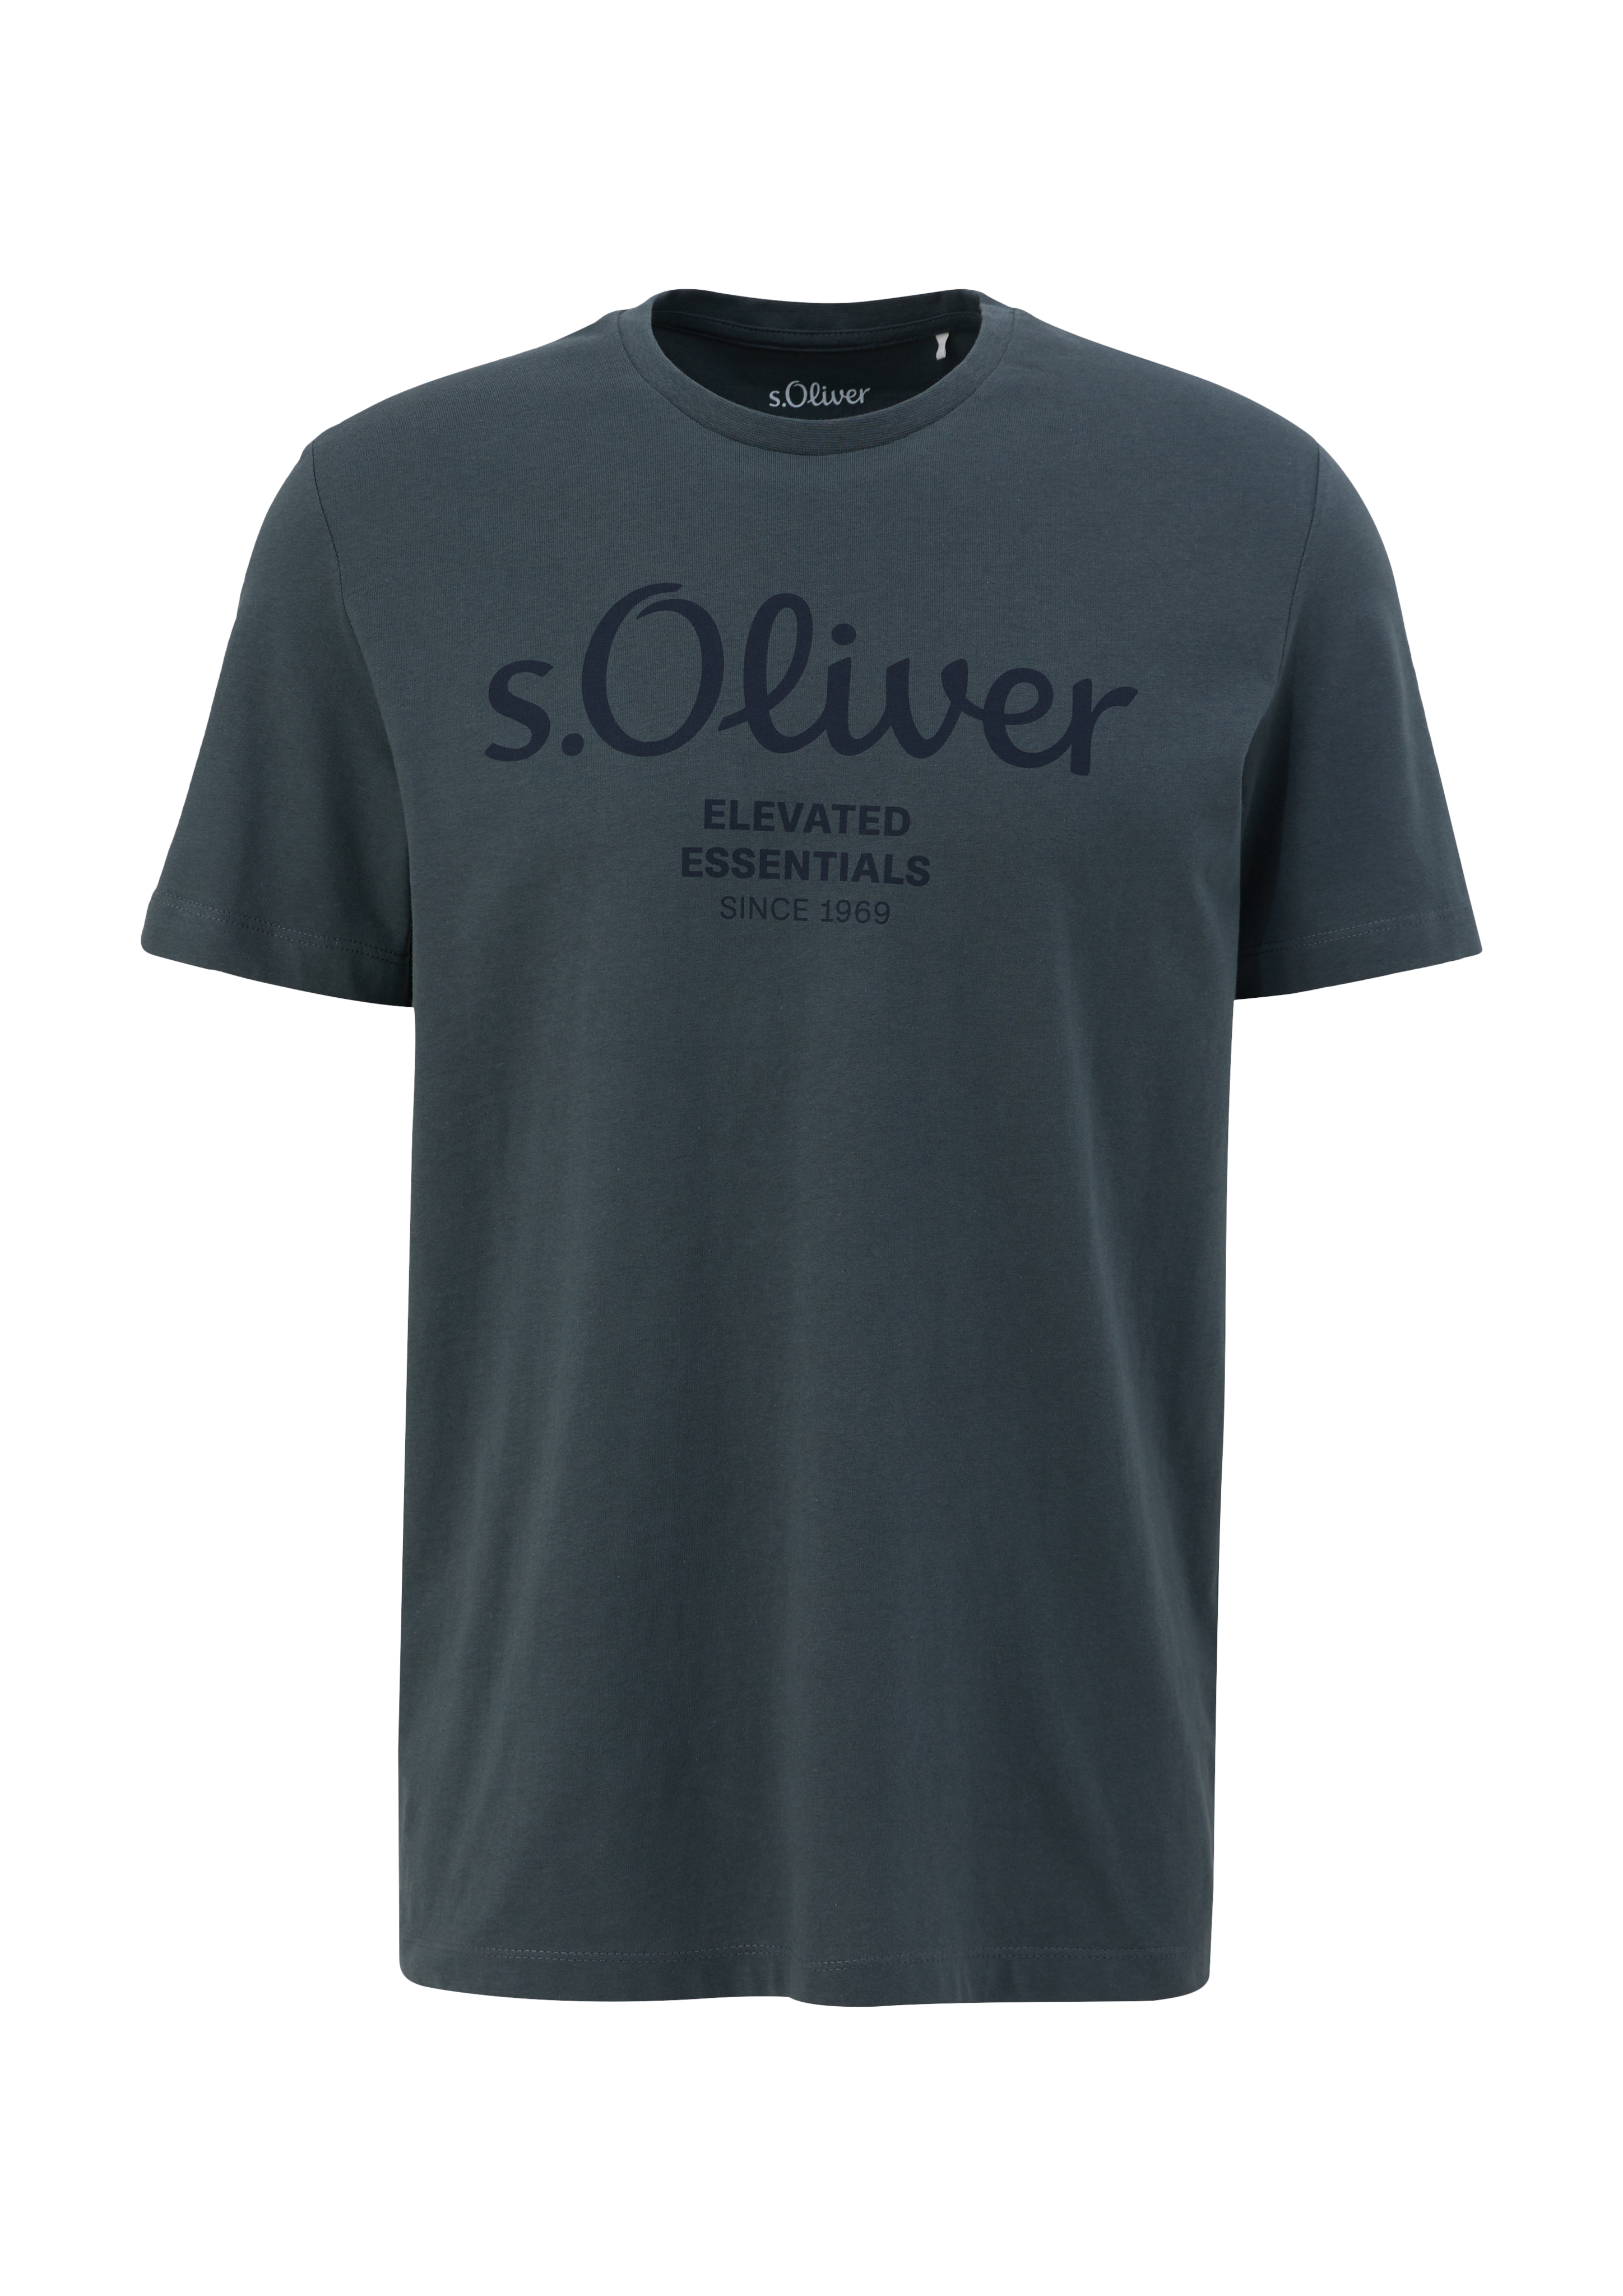 S. Oliver T-Shirt XXL grey place T-Shirt